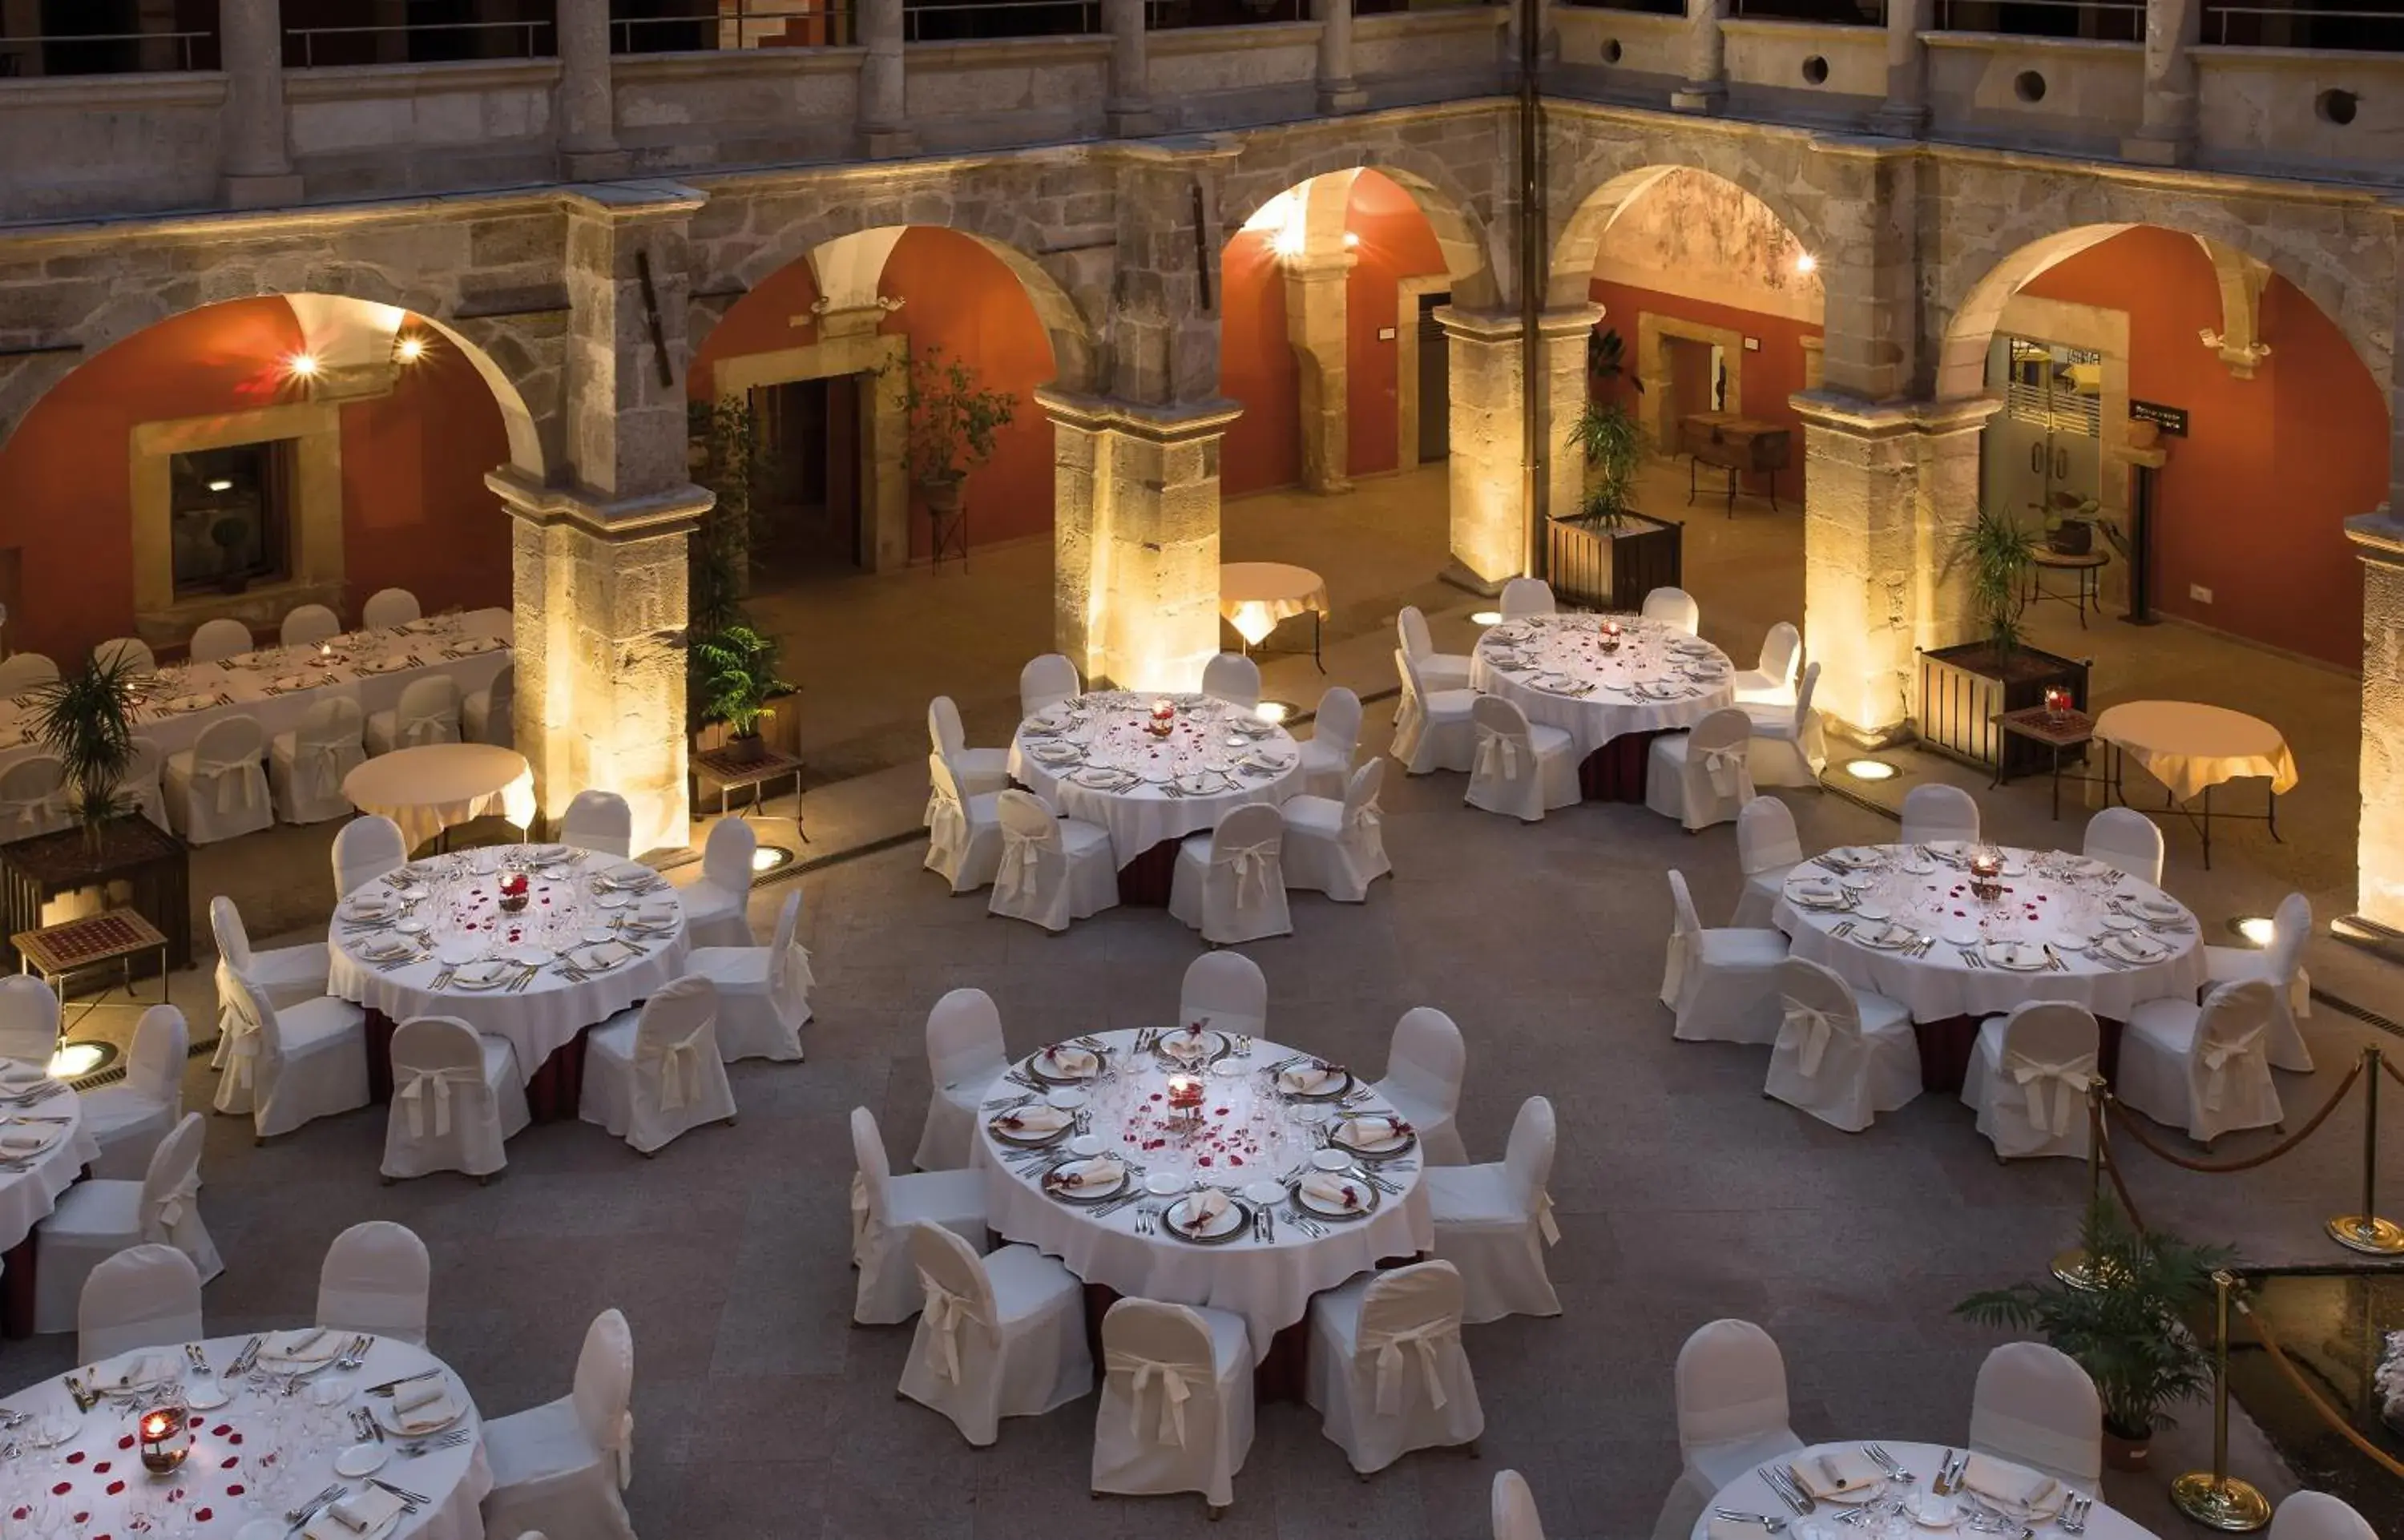 Banquet/Function facilities, Banquet Facilities in Izan Trujillo